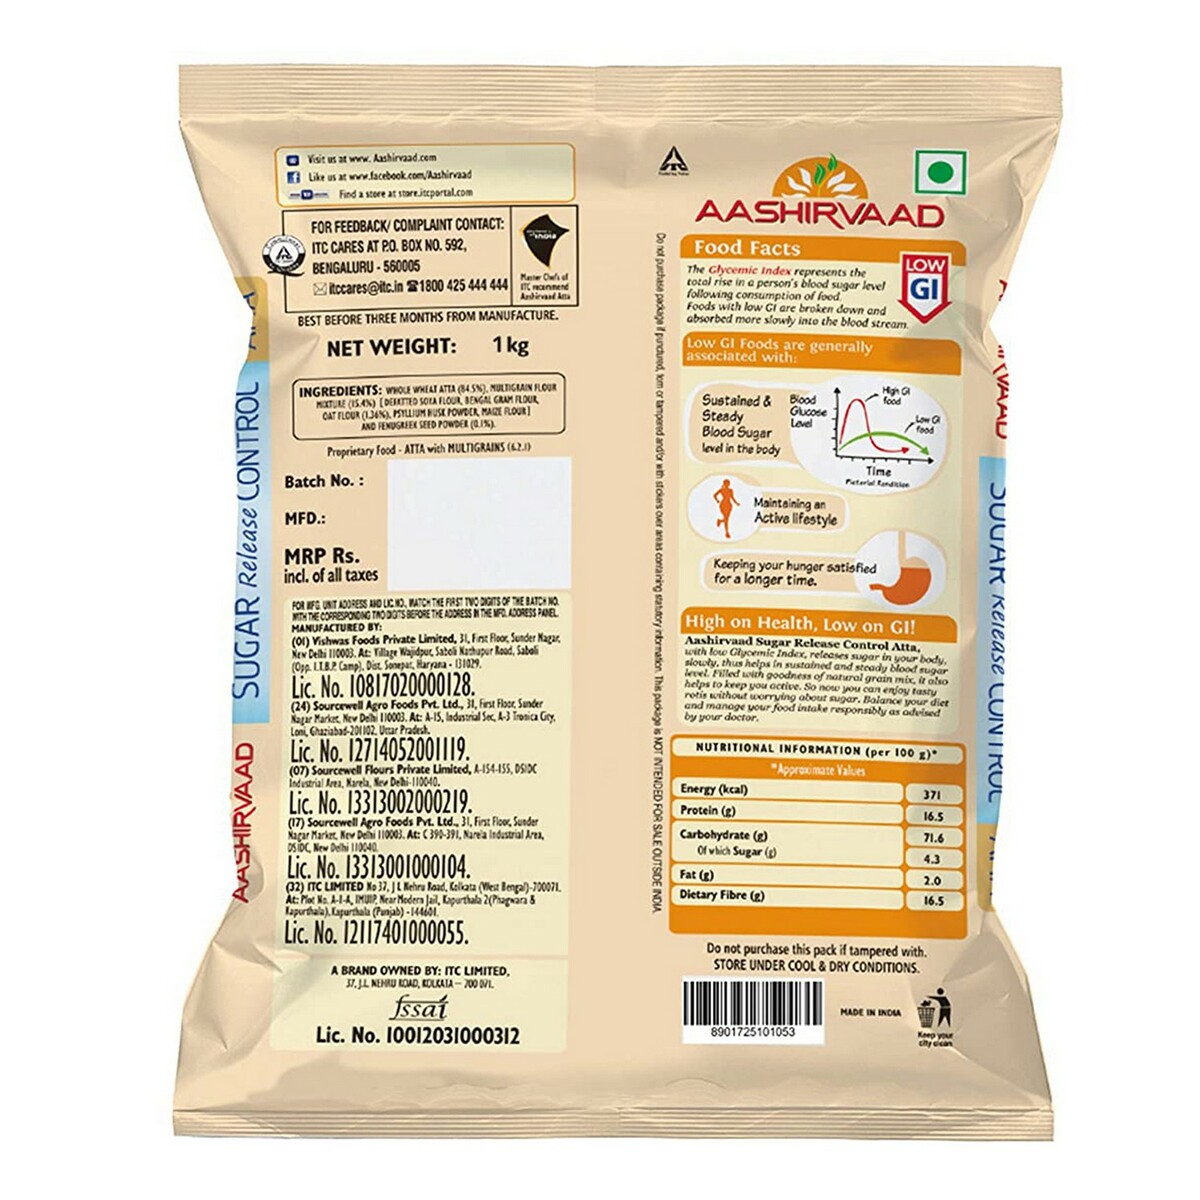 Aashirvaad Sugar Release Control Atta 1kg